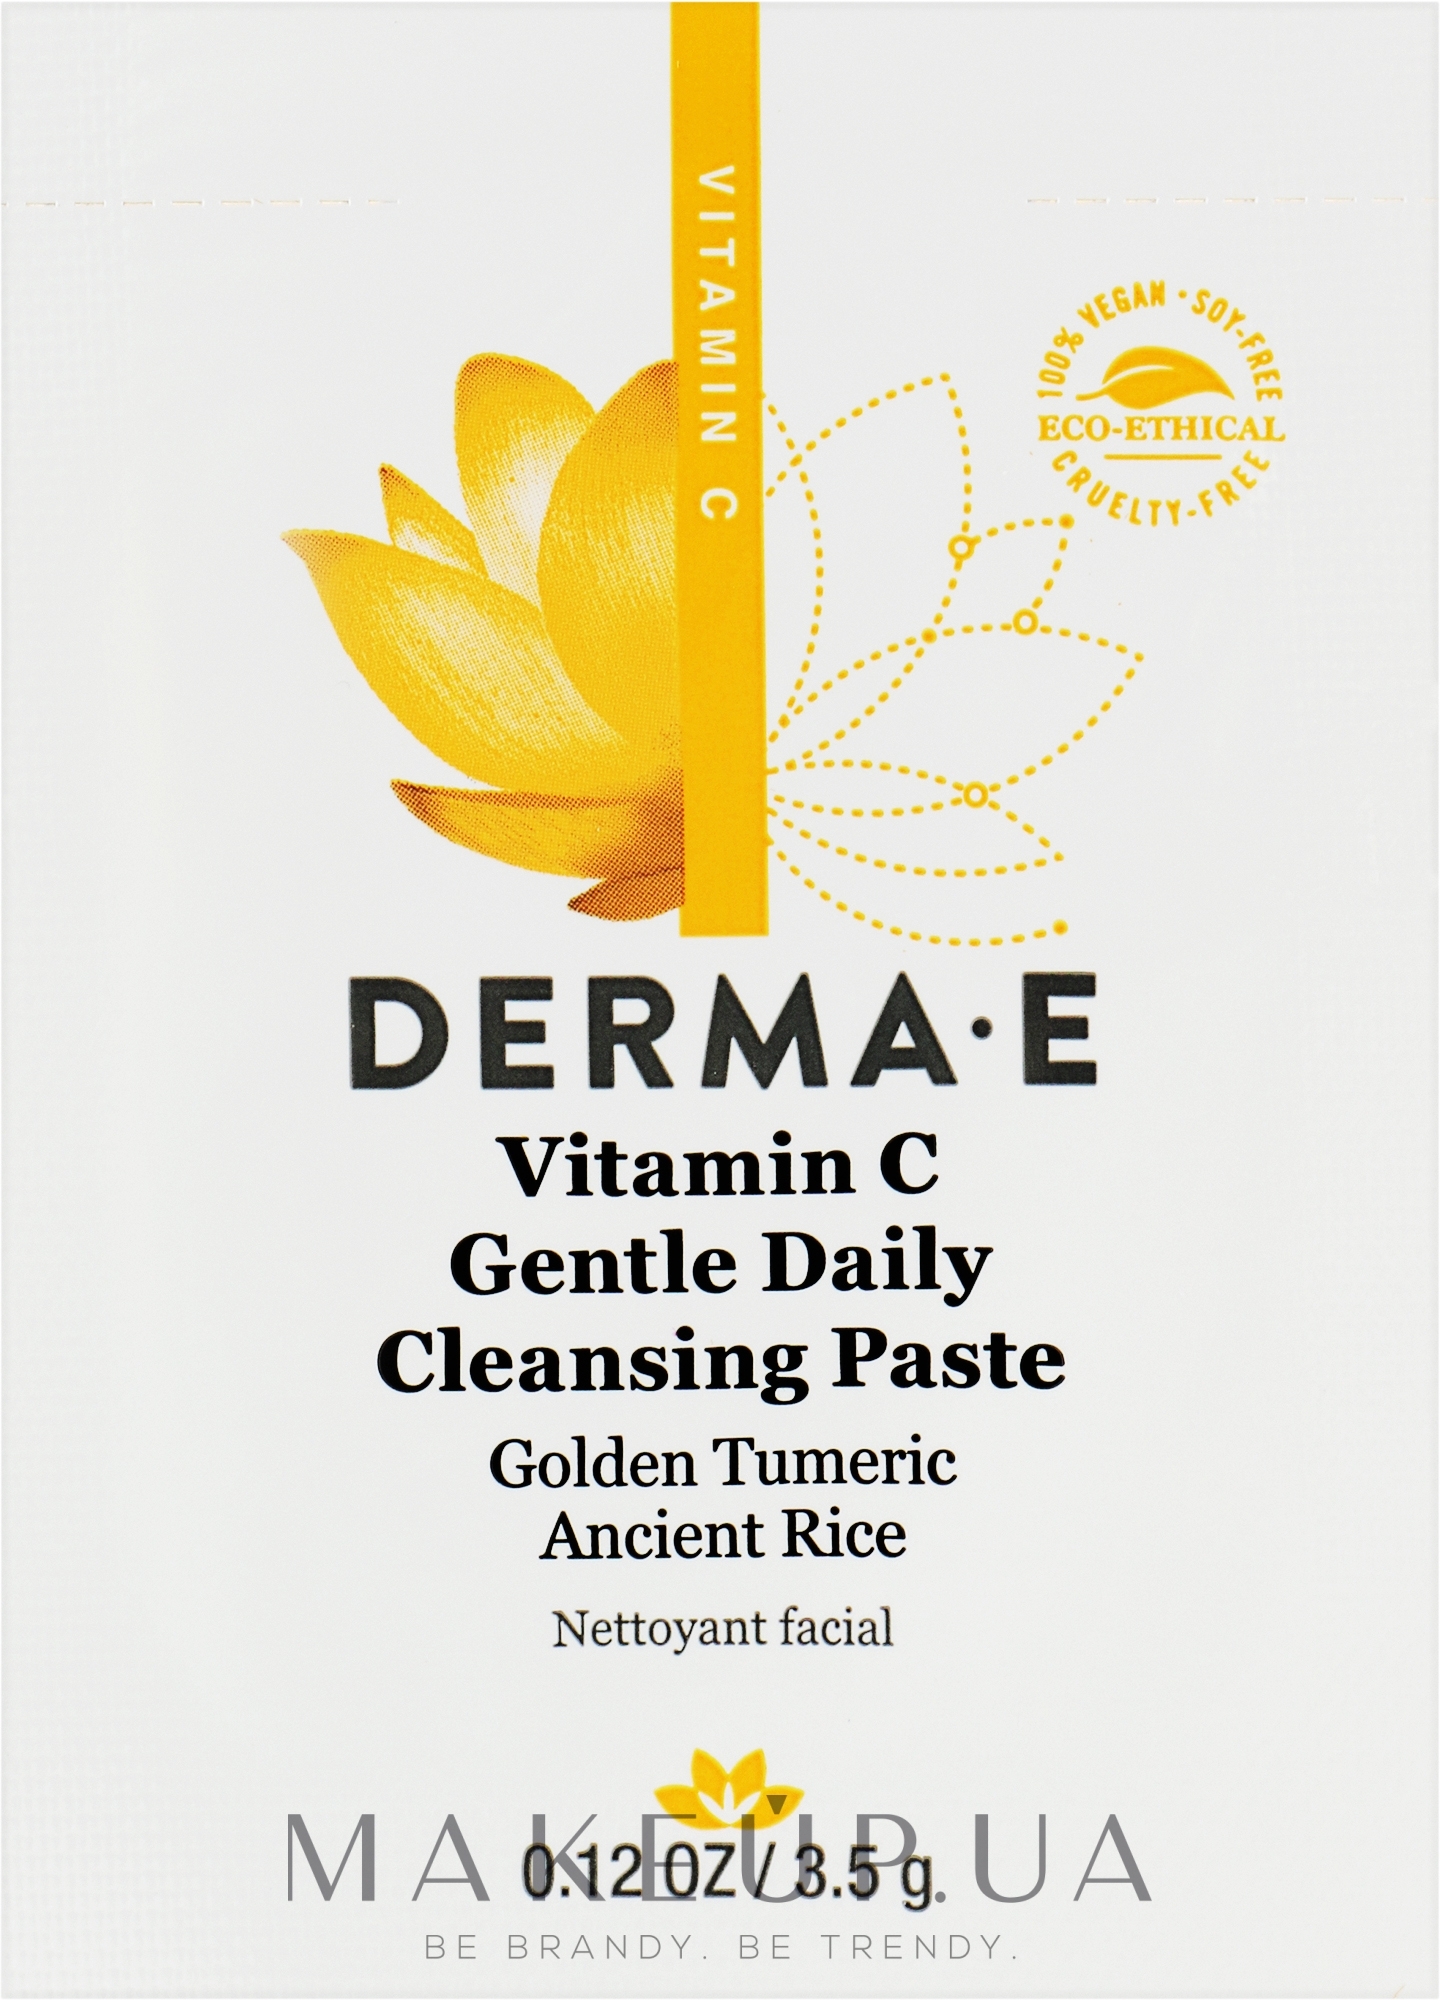 Нежная осветляющая ежедневная паста 2-в-1 с витамином С - Derma E Vitamin C Gentle Daily Cleansing Paste (пробник) — фото 3.5g